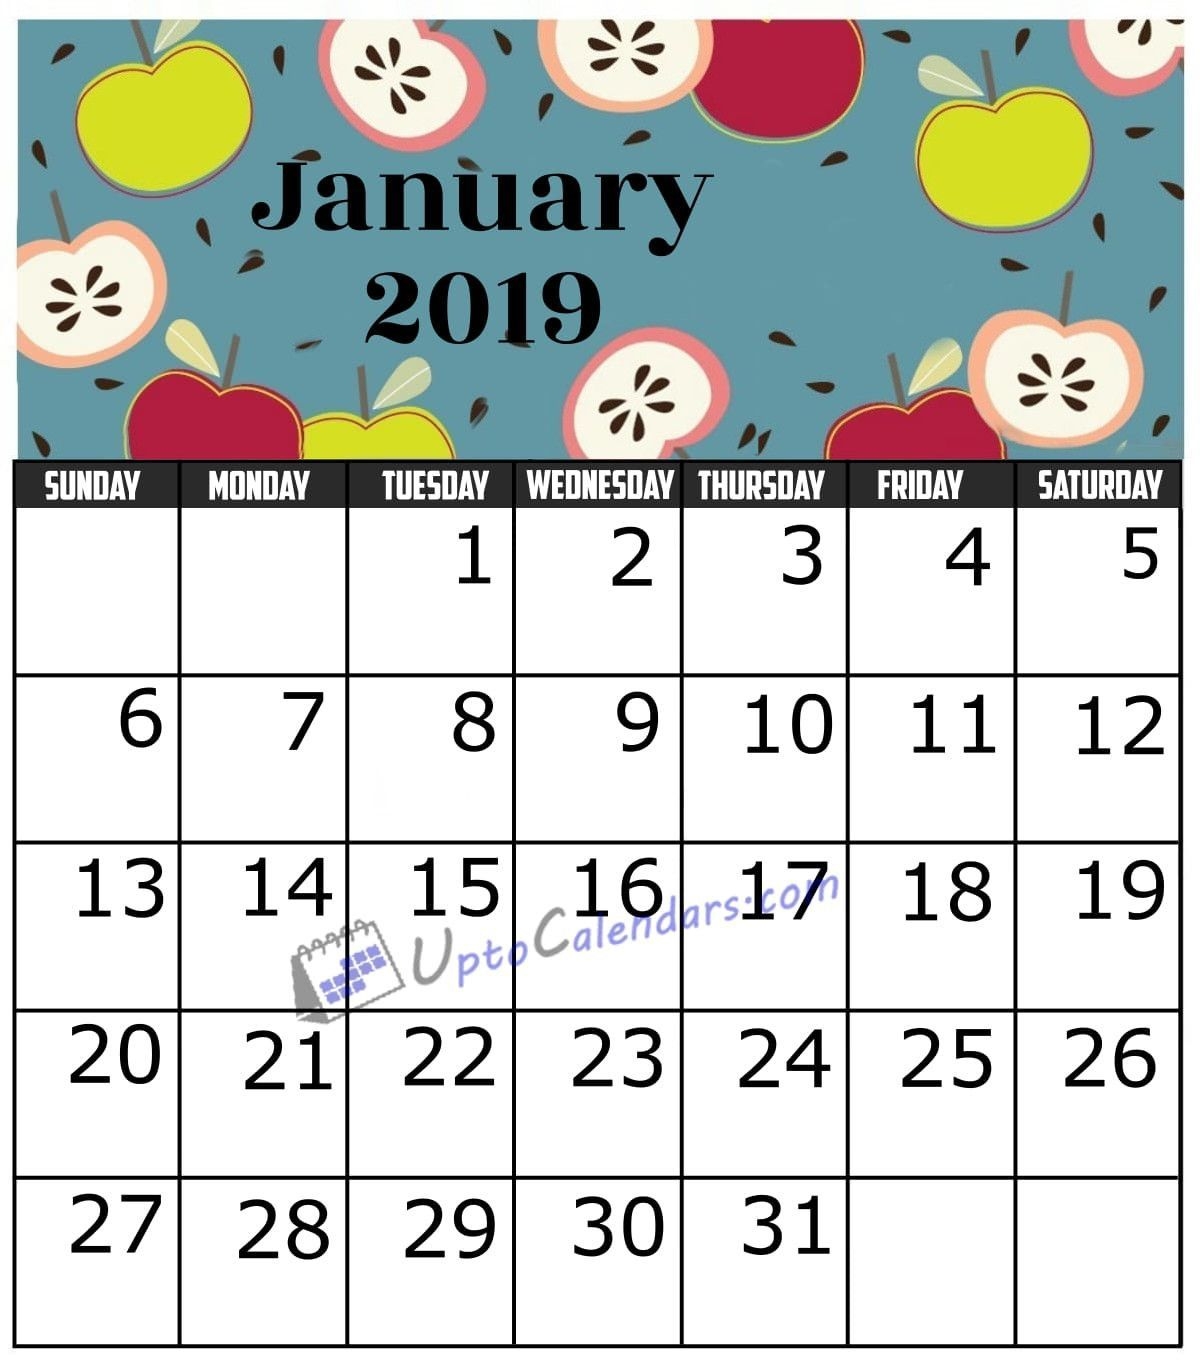 january 2019 calendar printable https://www uptocalendars